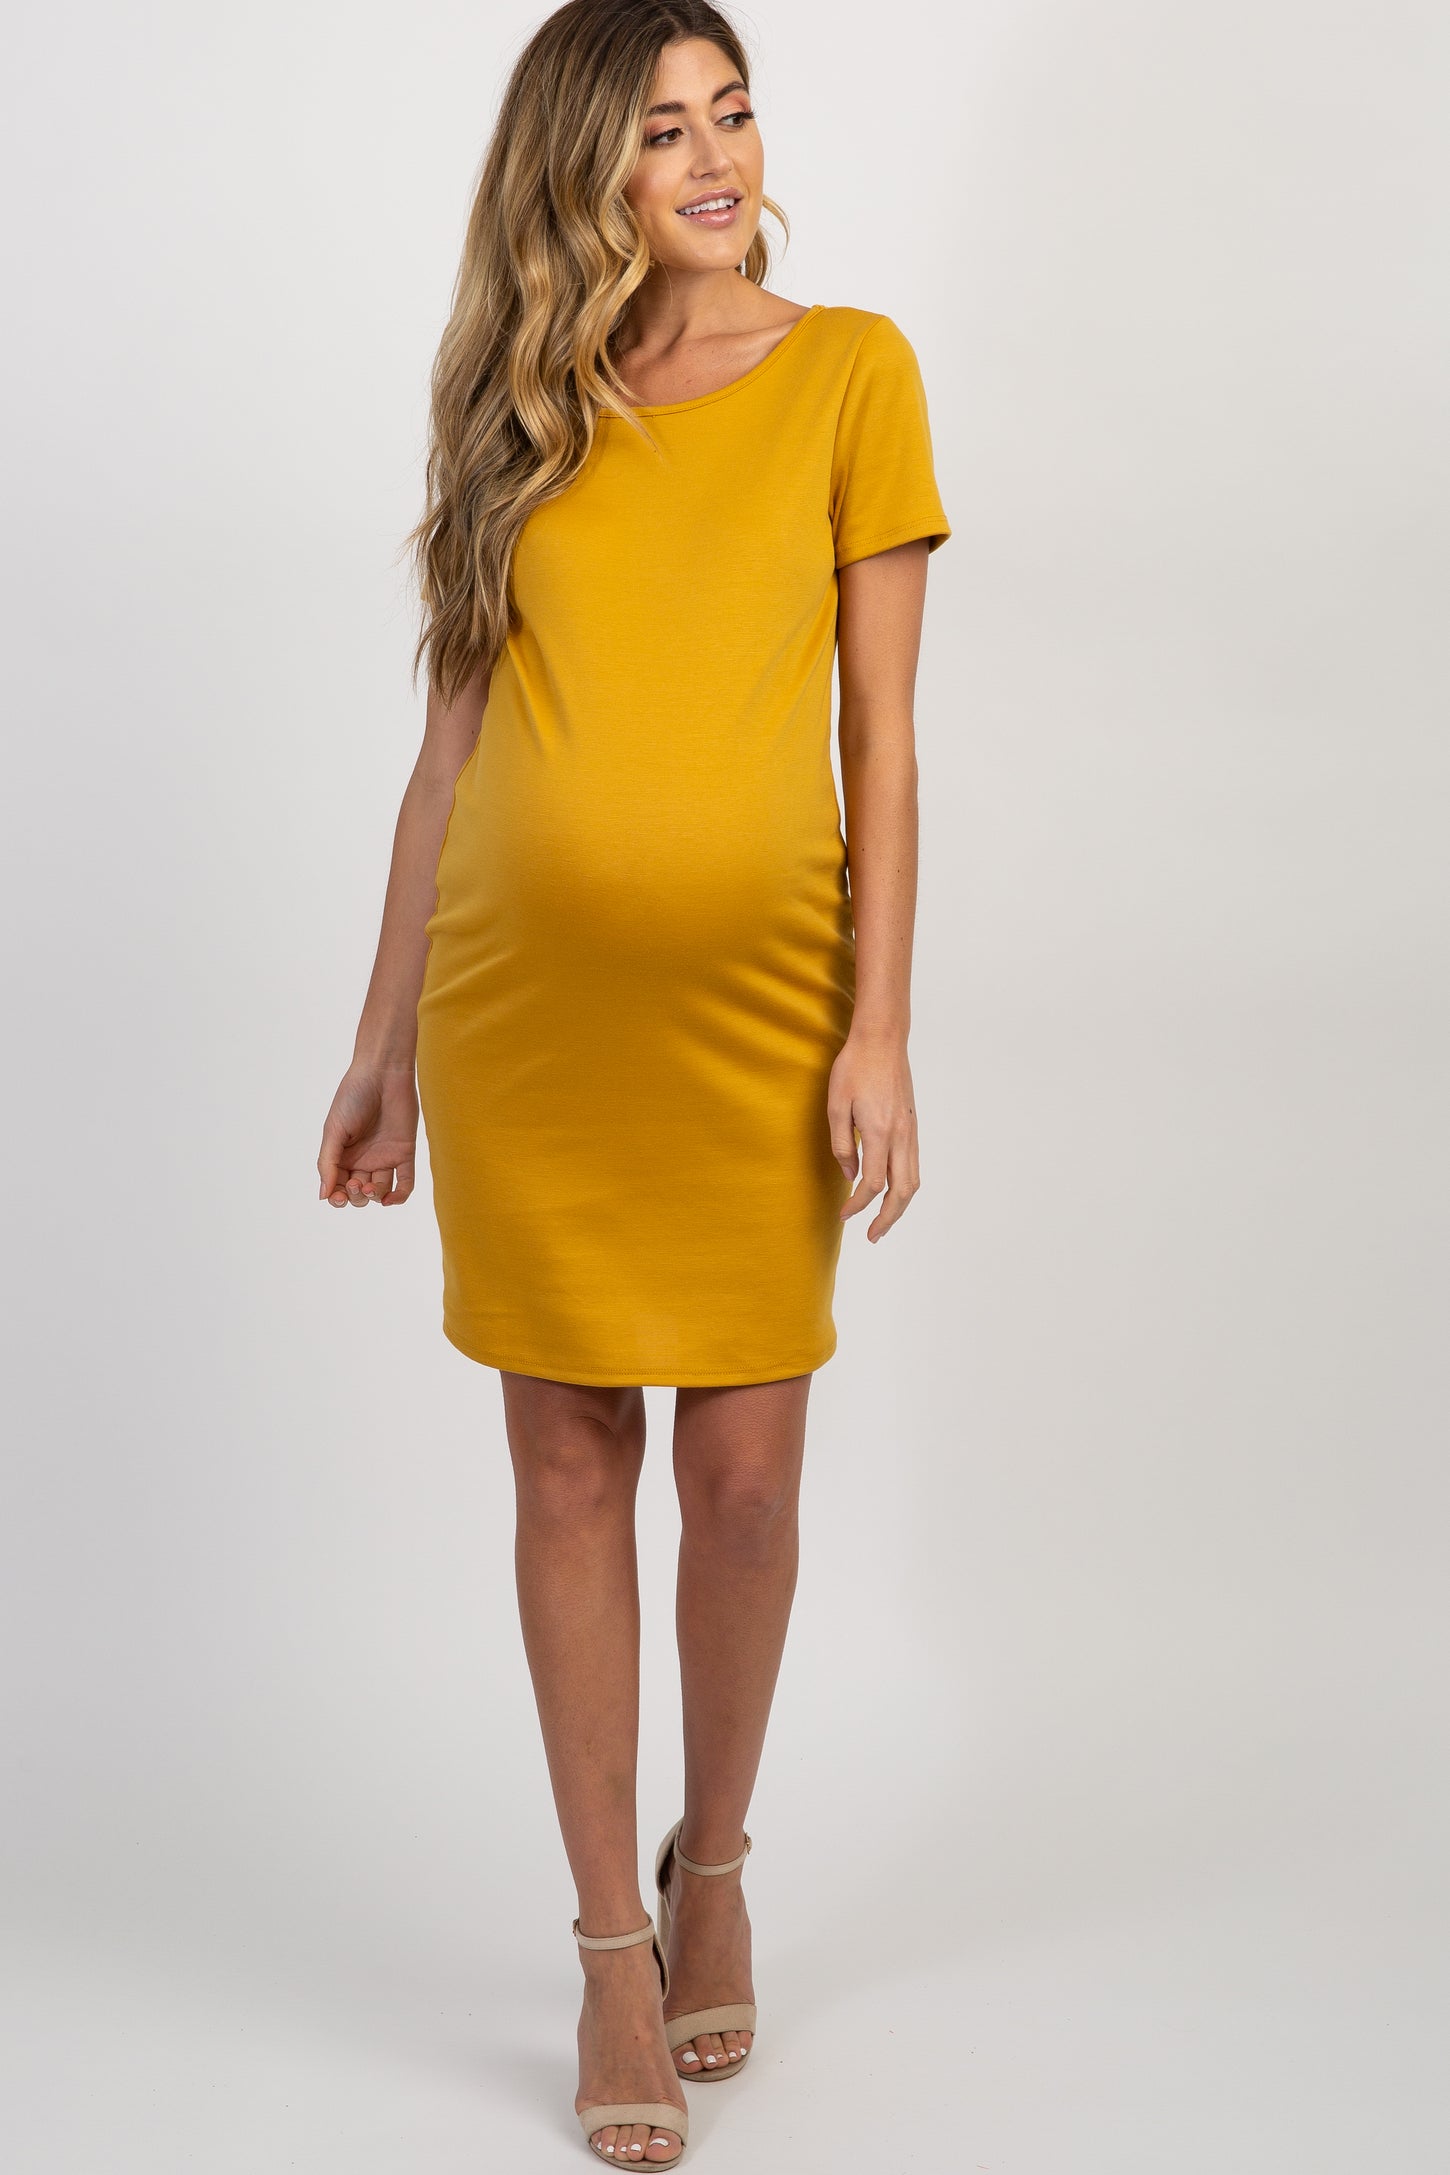 PinkBlush Yellow Fitted Short Sleeve Maternity Dress